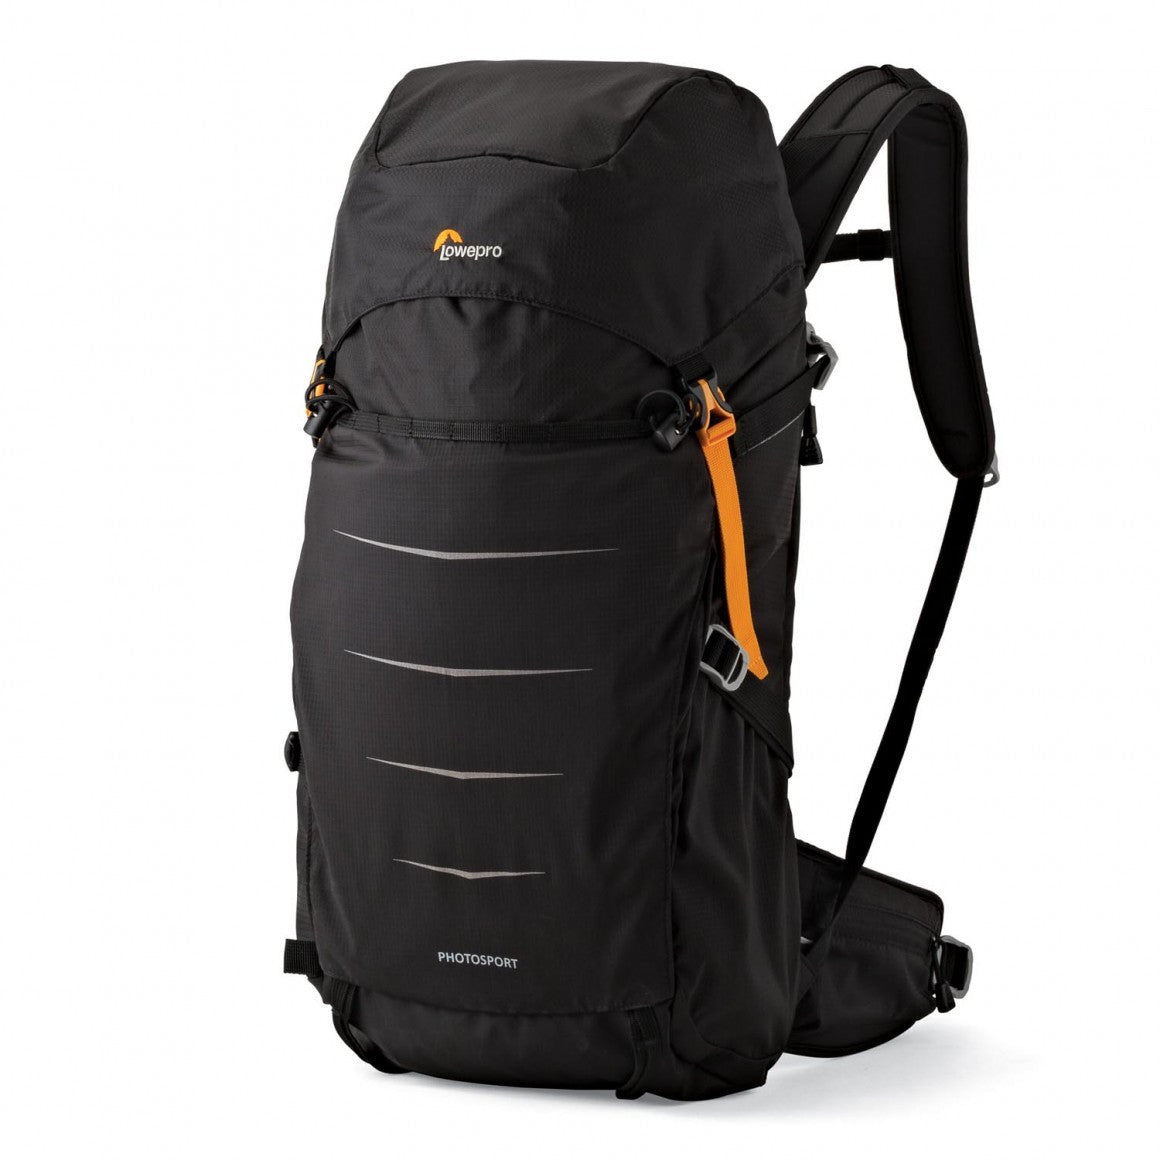 Lowepro Photo Sport 300 AW II Backpack (Black), bags backpacks, Lowepro - Pictureline  - 1